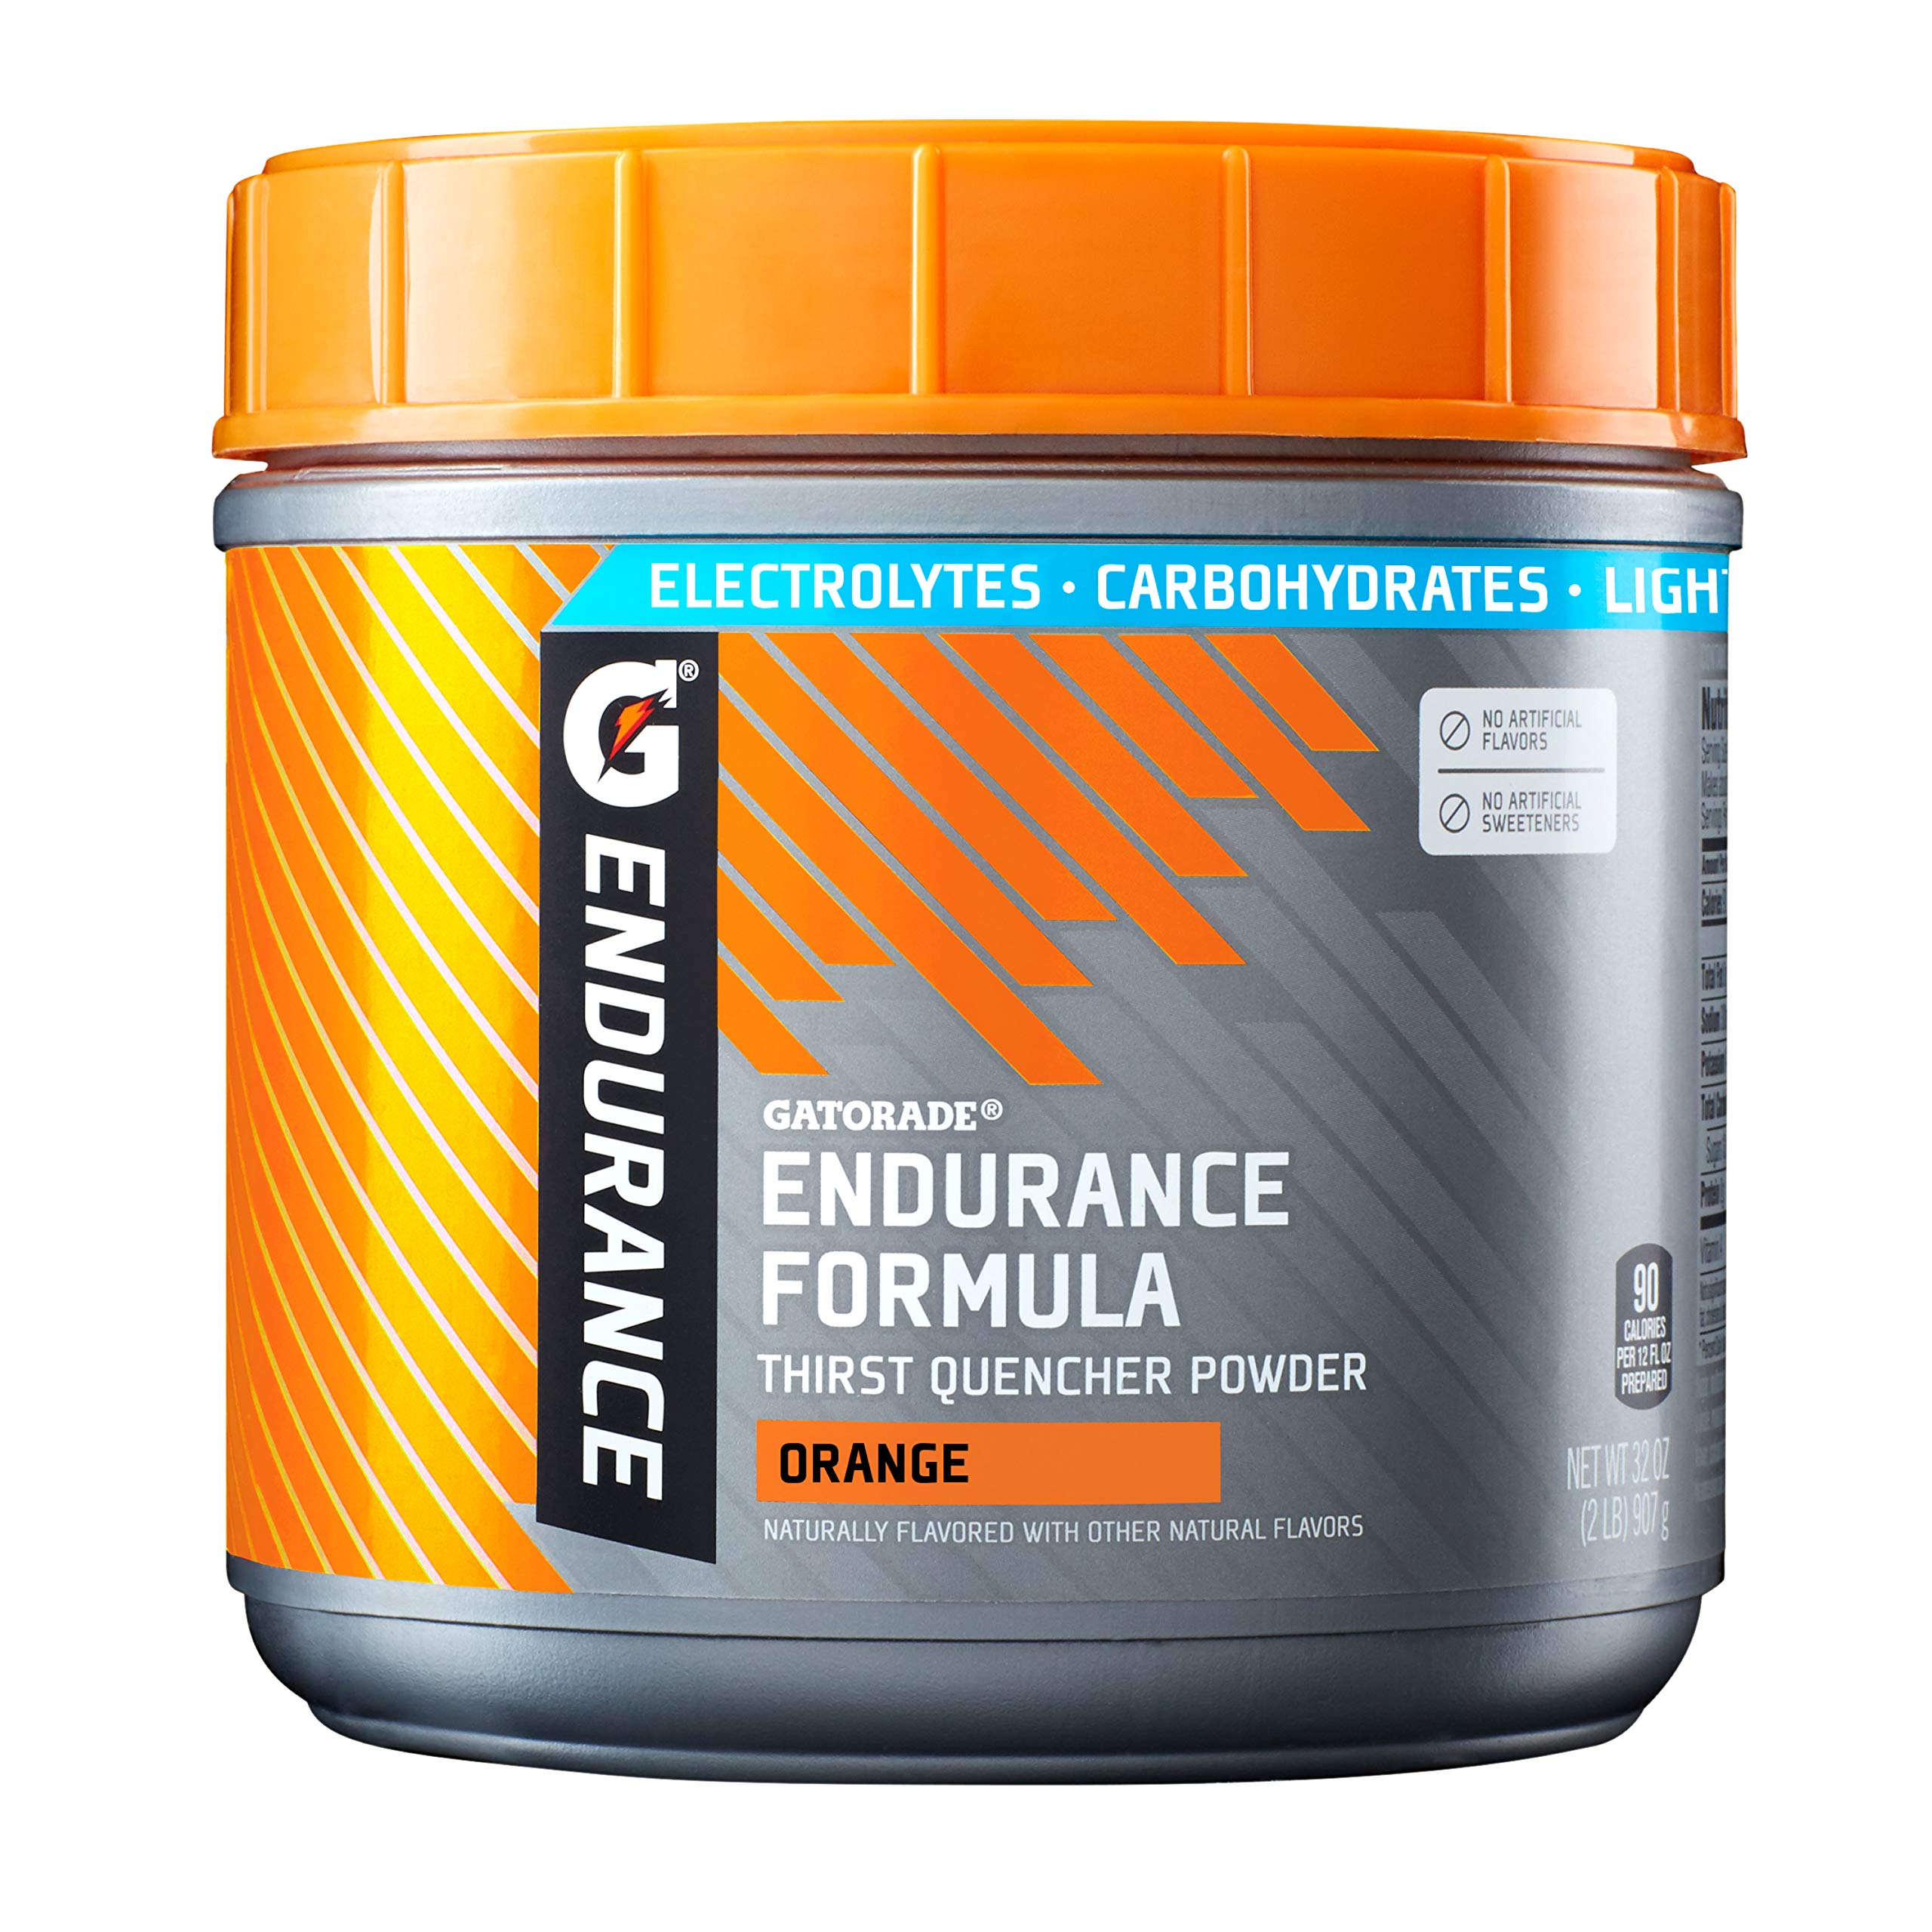 Gatorade Endurance Formula Powder, Orange, 32 Ounce (Pack of 1)